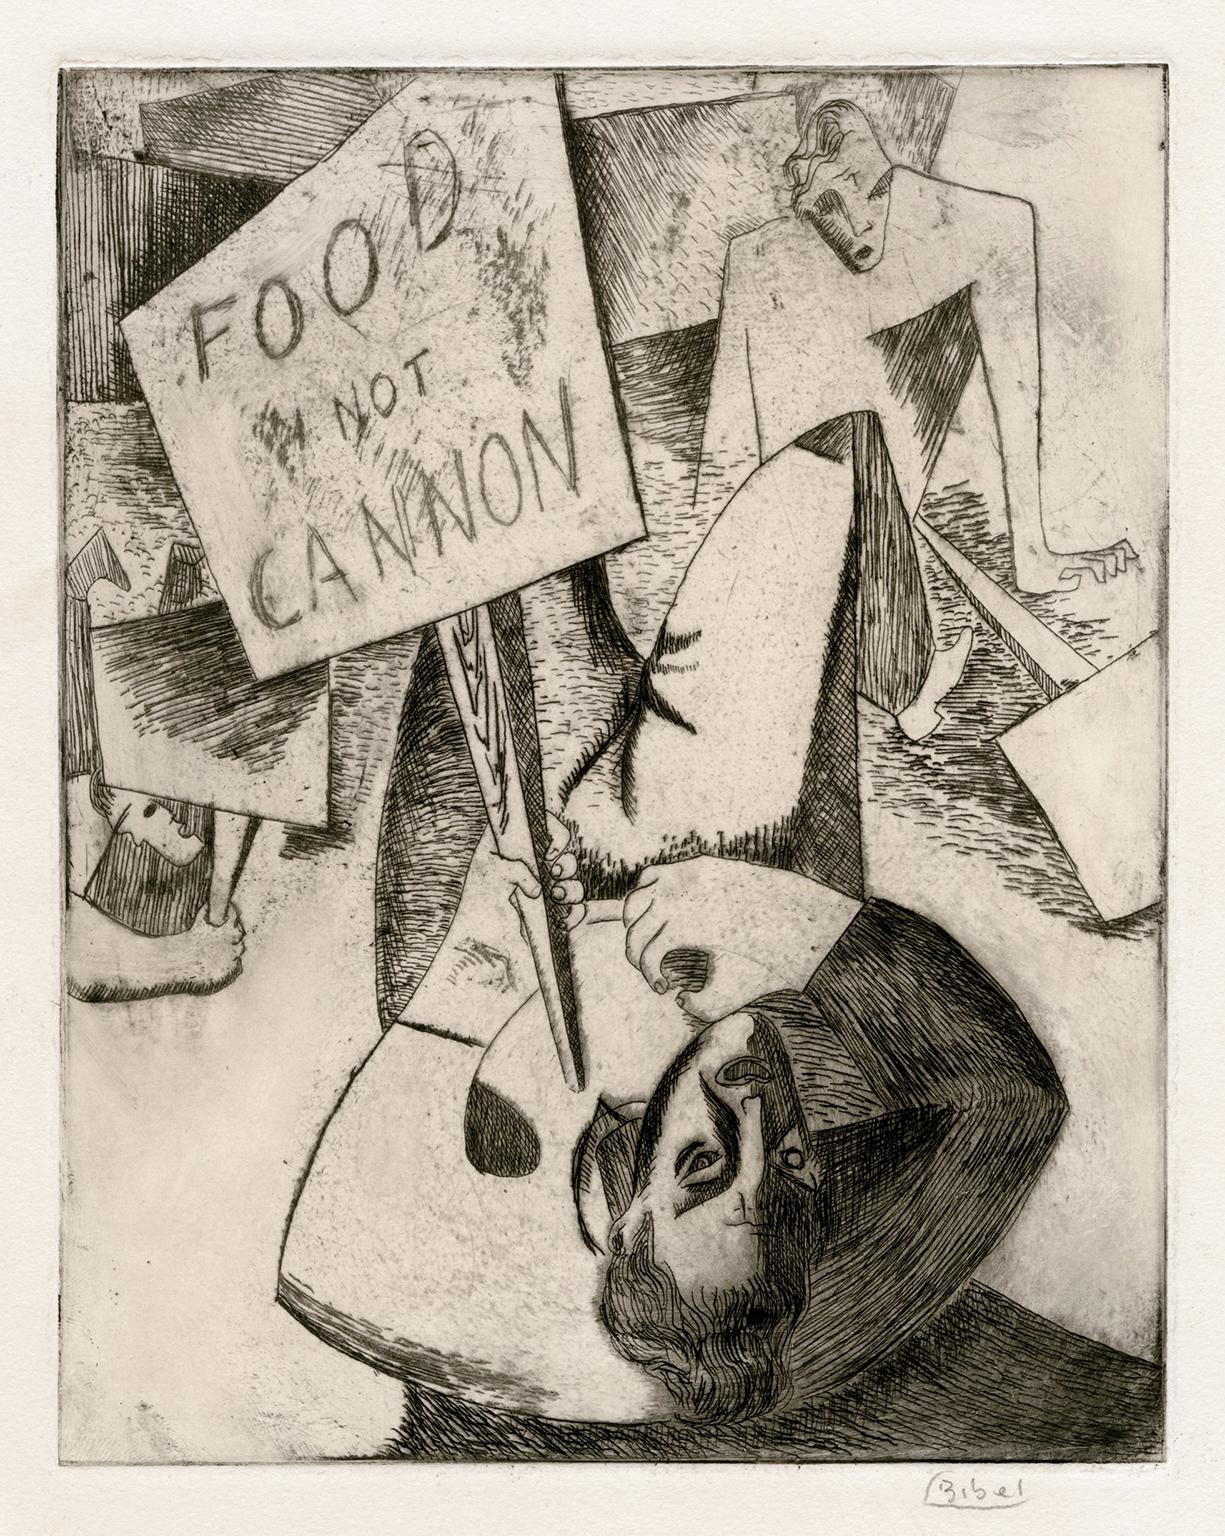 Figurative Print Leon Bibel - Food Not Cannon" - une rare œuvre moderniste de la WPA  Conscience sociale